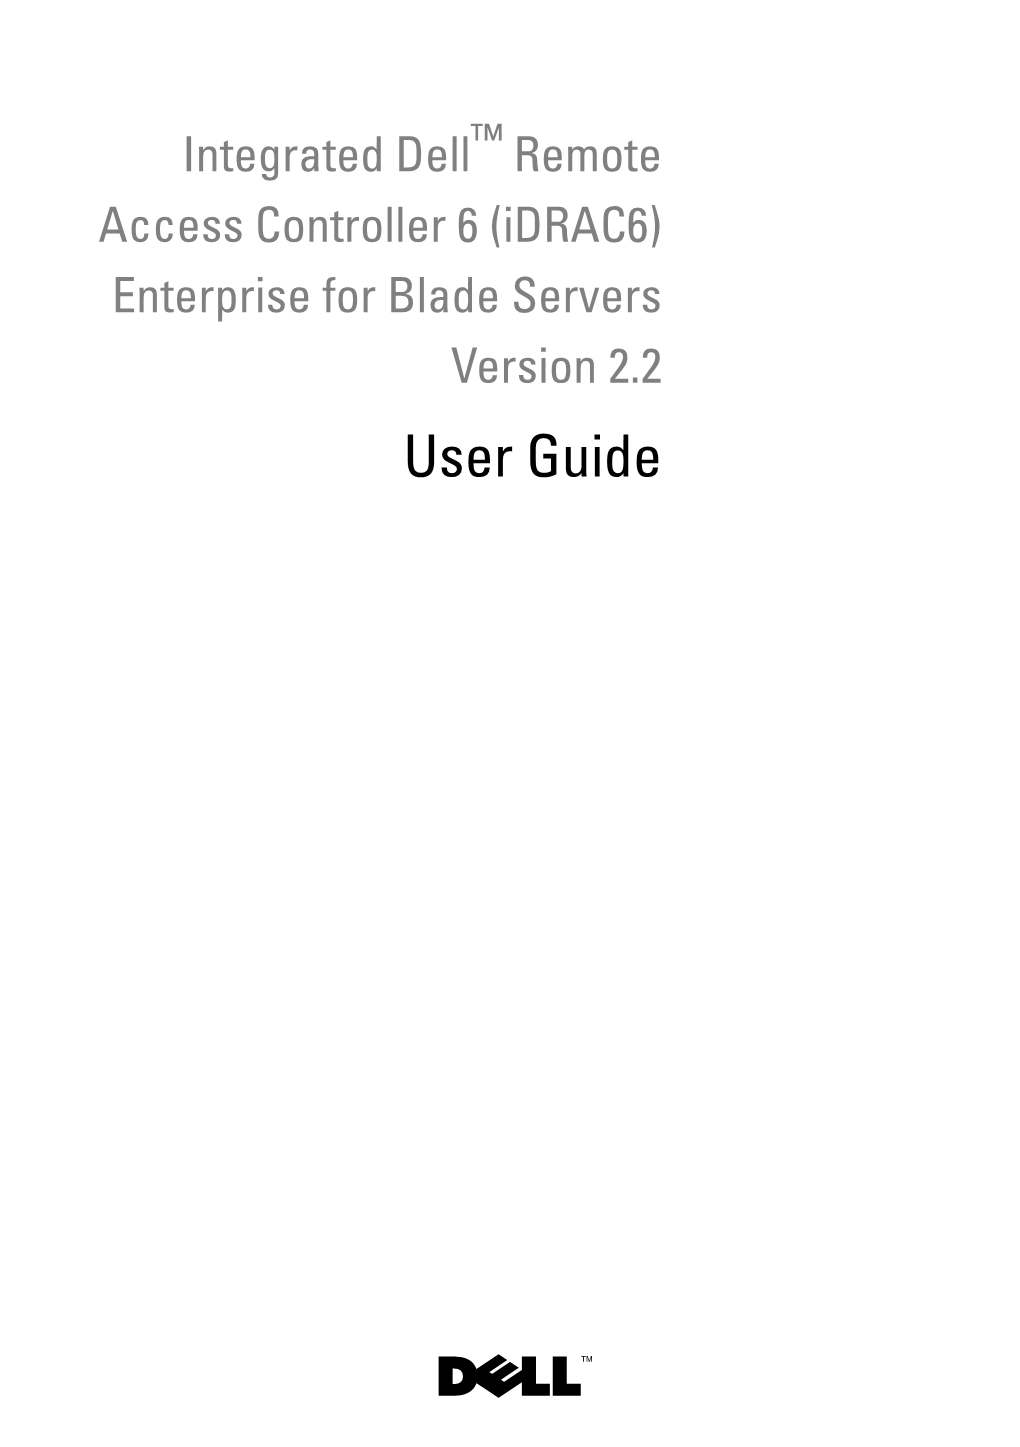 Idrac6 Enterprise for Blade Servers Version 2.2 User Guide